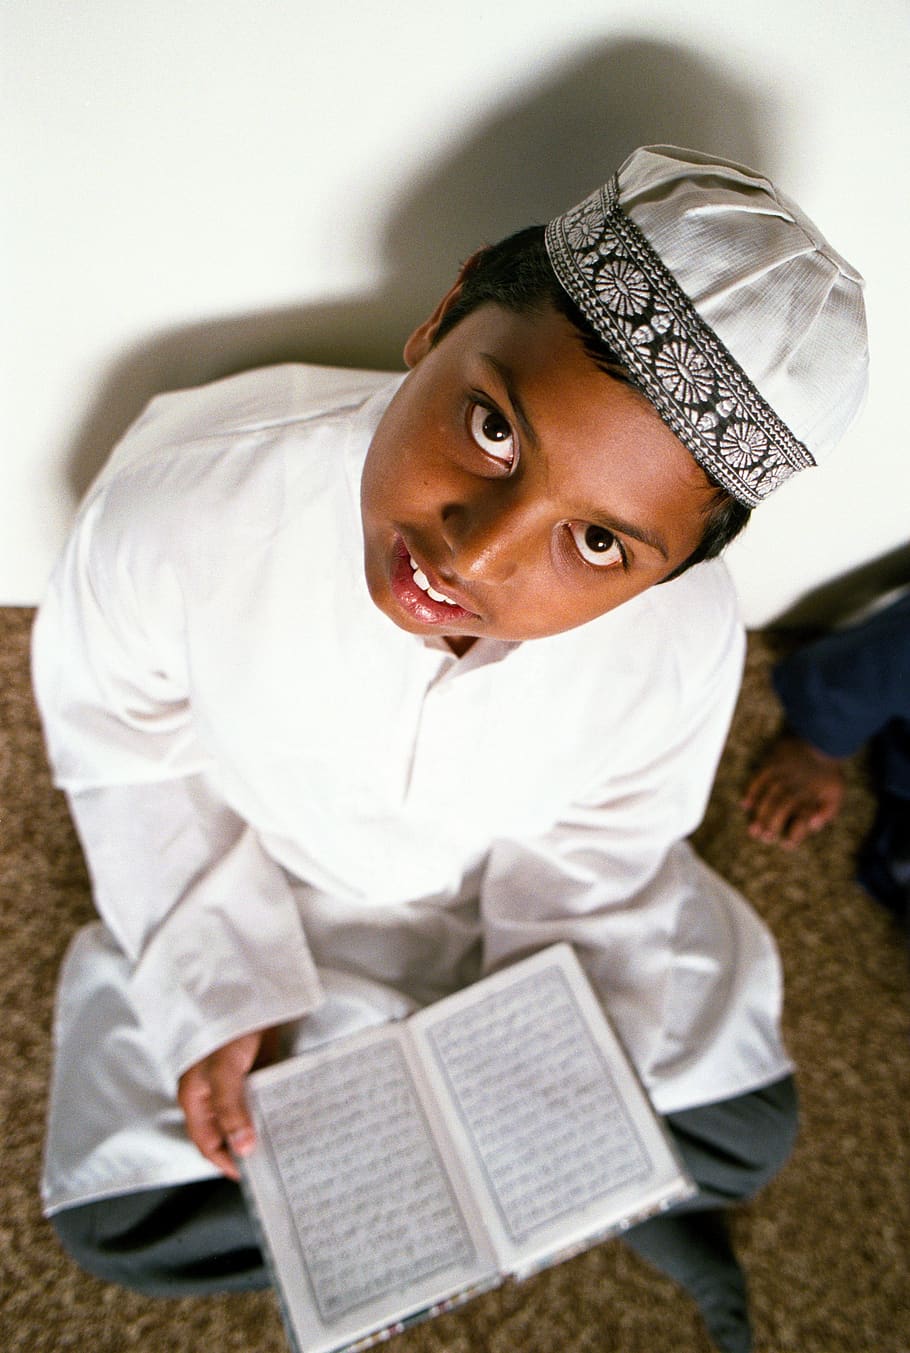 koran, school, pupil, religion, islam, indoctrination, reading, sketchbook, moslem, boy